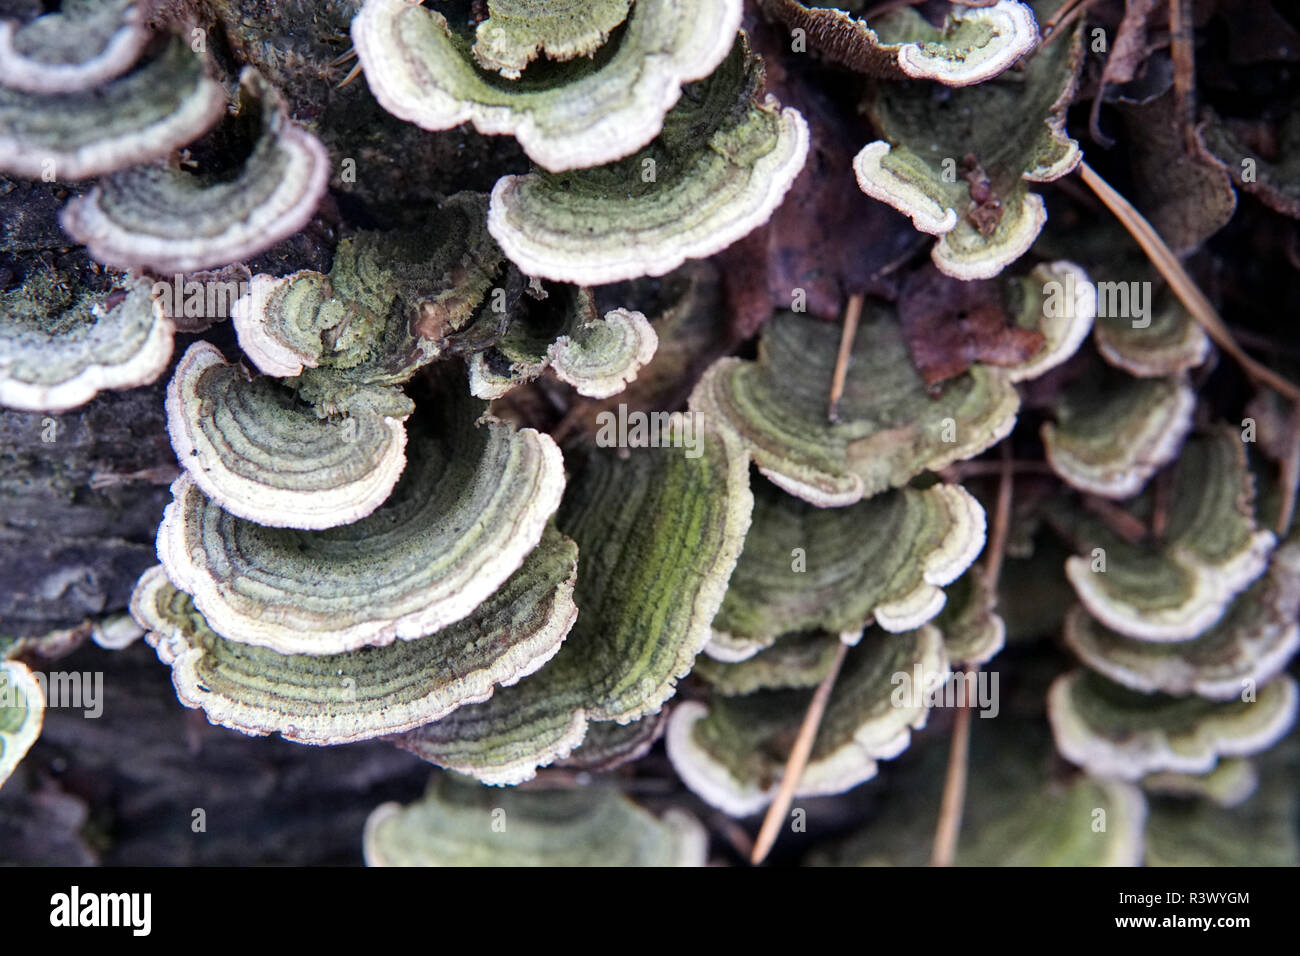 Trocken Trametes hirsuta Behaarte Halterung Pilz auf faulen Birkenstamm  Stockfotografie - Alamy